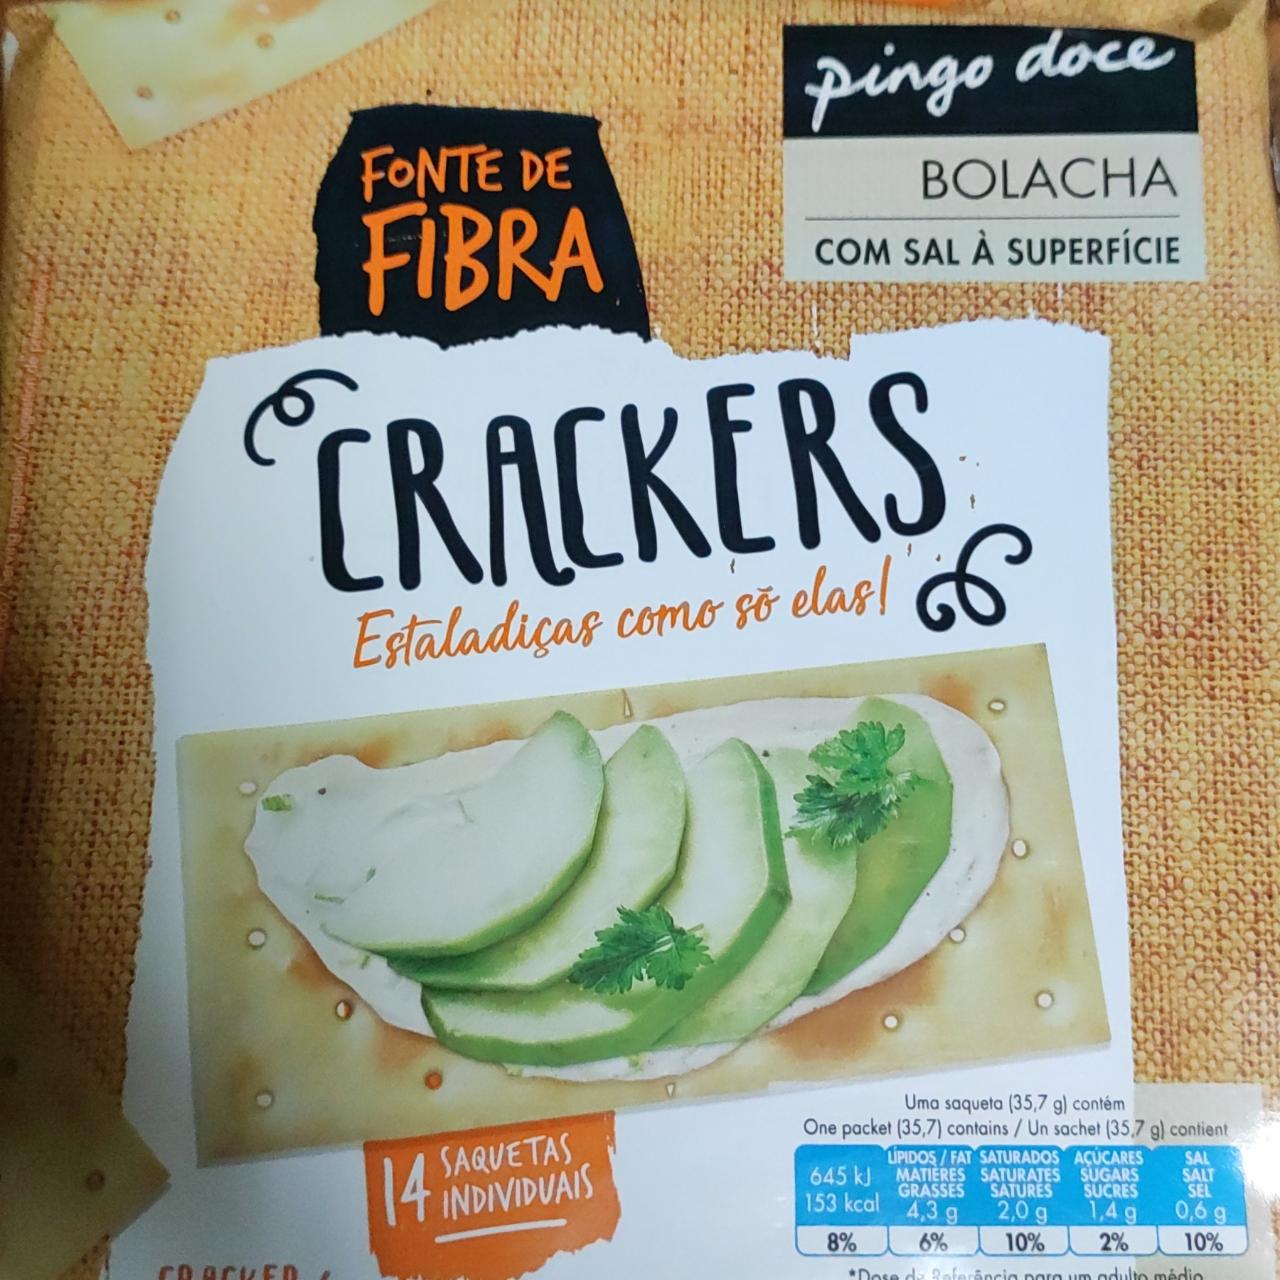 Zdjęcia - Crackers Fonte de fibra Pingo Doce